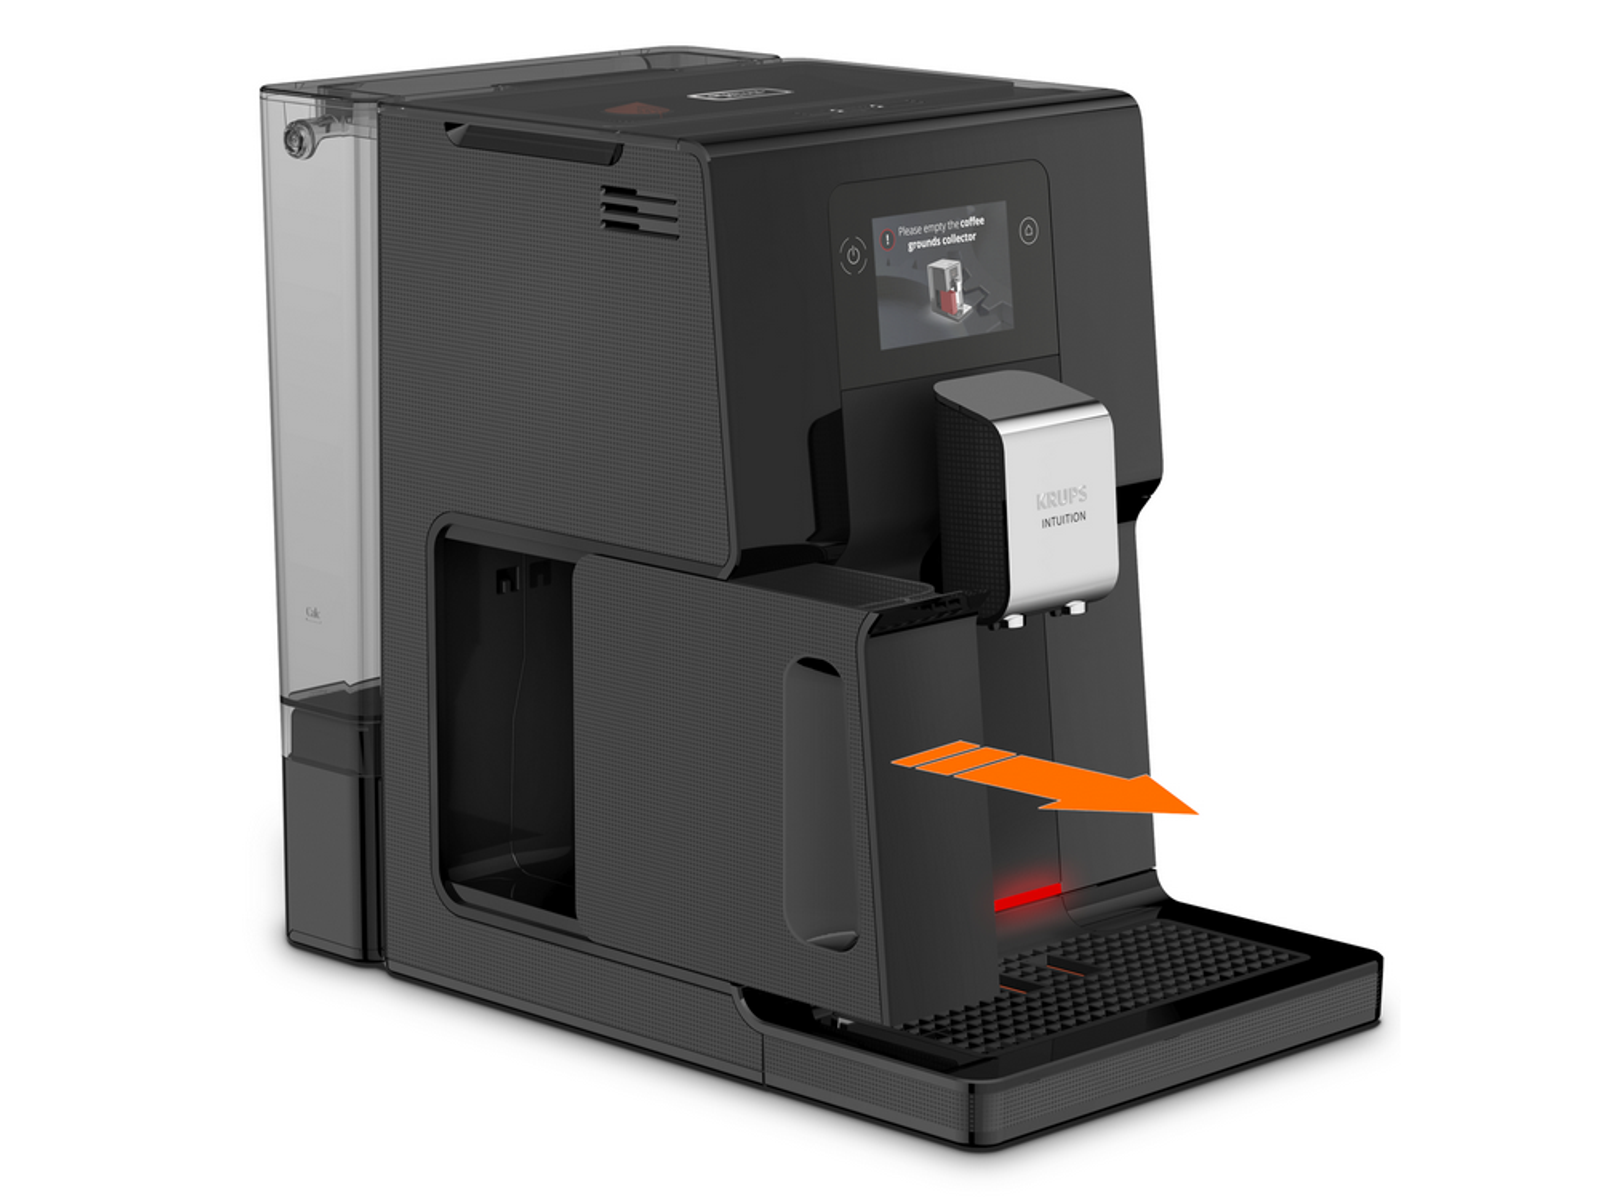 KRUPS EA Schwarz INTUITION PREFERENCE Kaffeevollautomat 8738